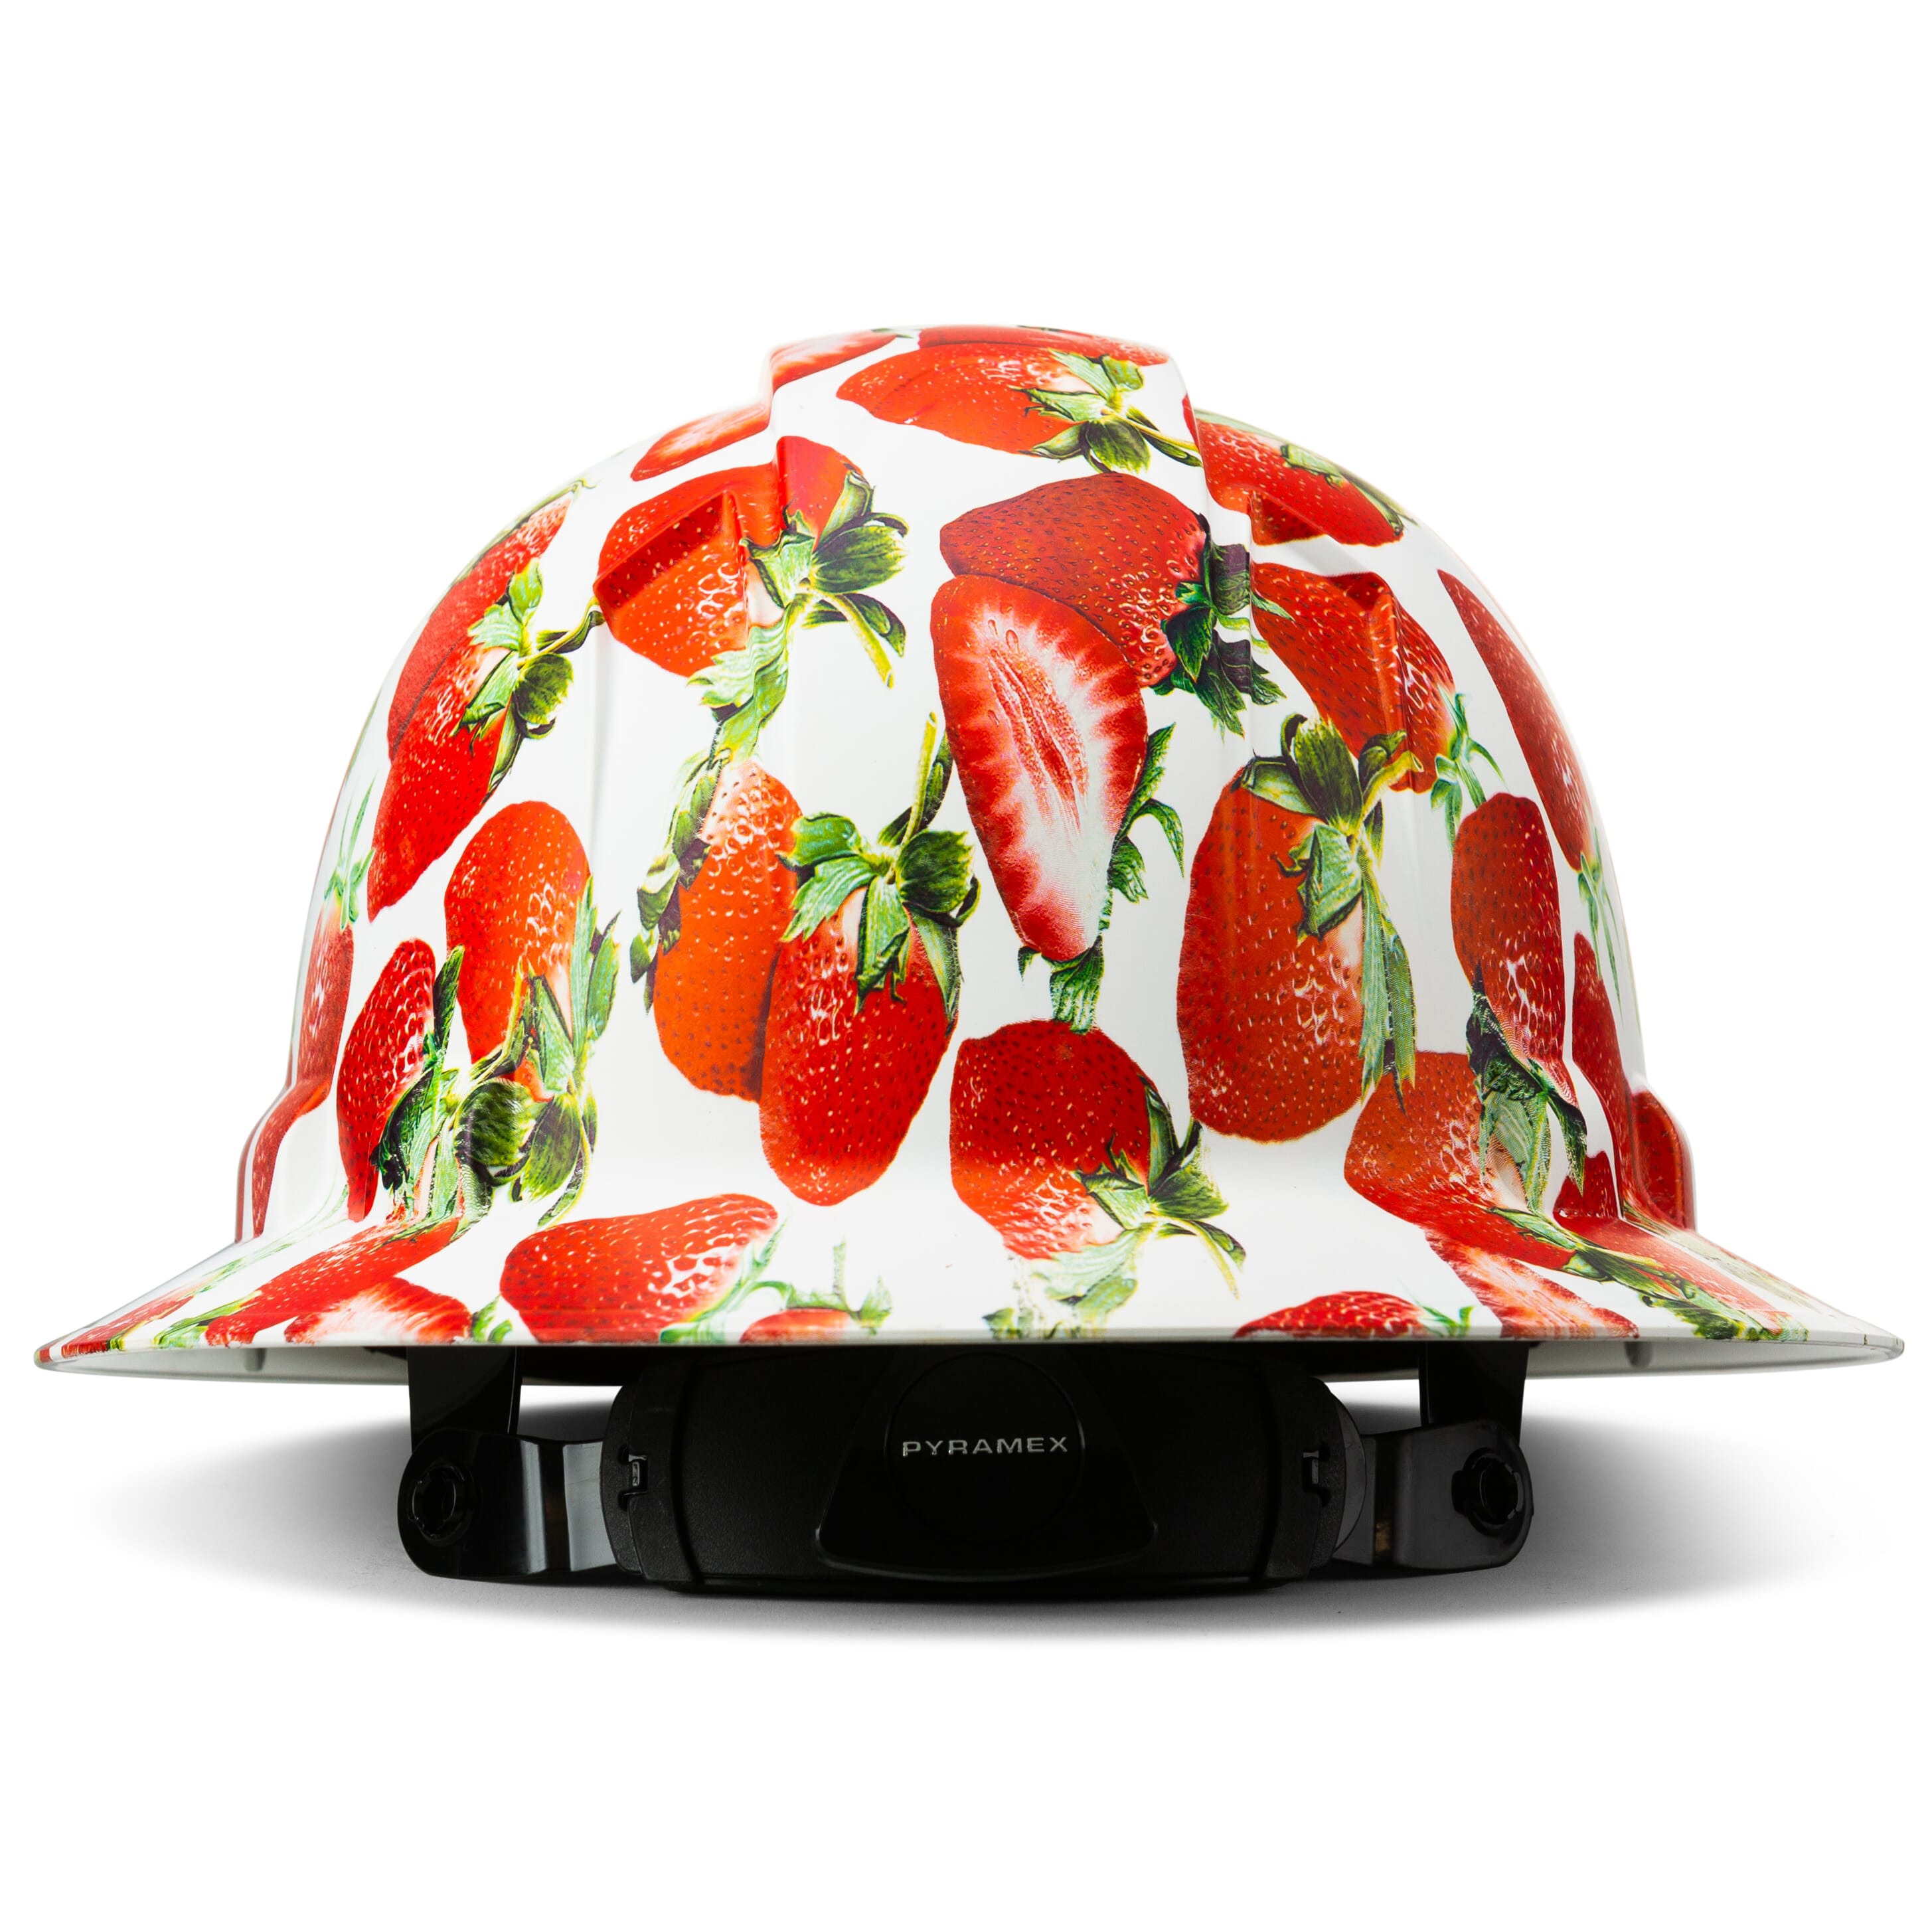 Full Brim Pyramex Hard Hat, Custom Strawberry Fields Design, Safety Helmet, 6 Point